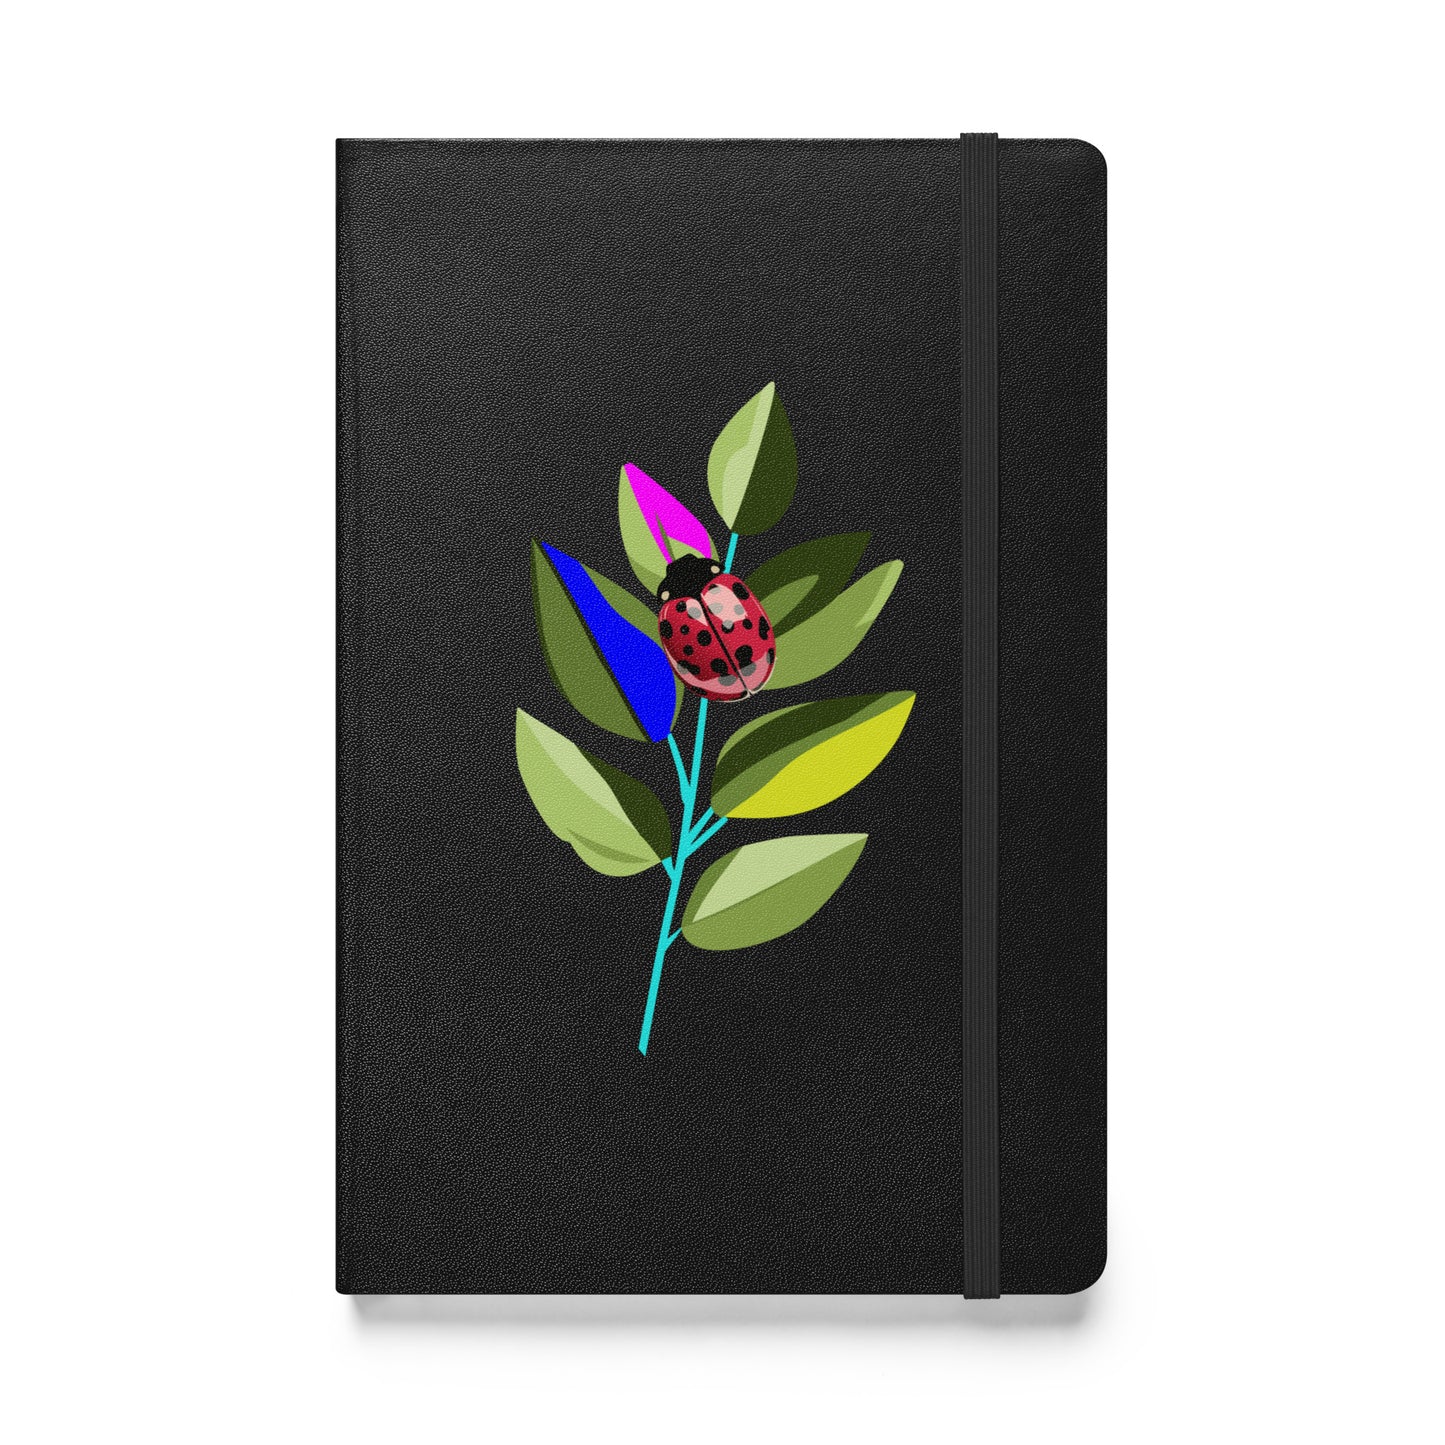 Ladybug Branch Hardcover bound notebook